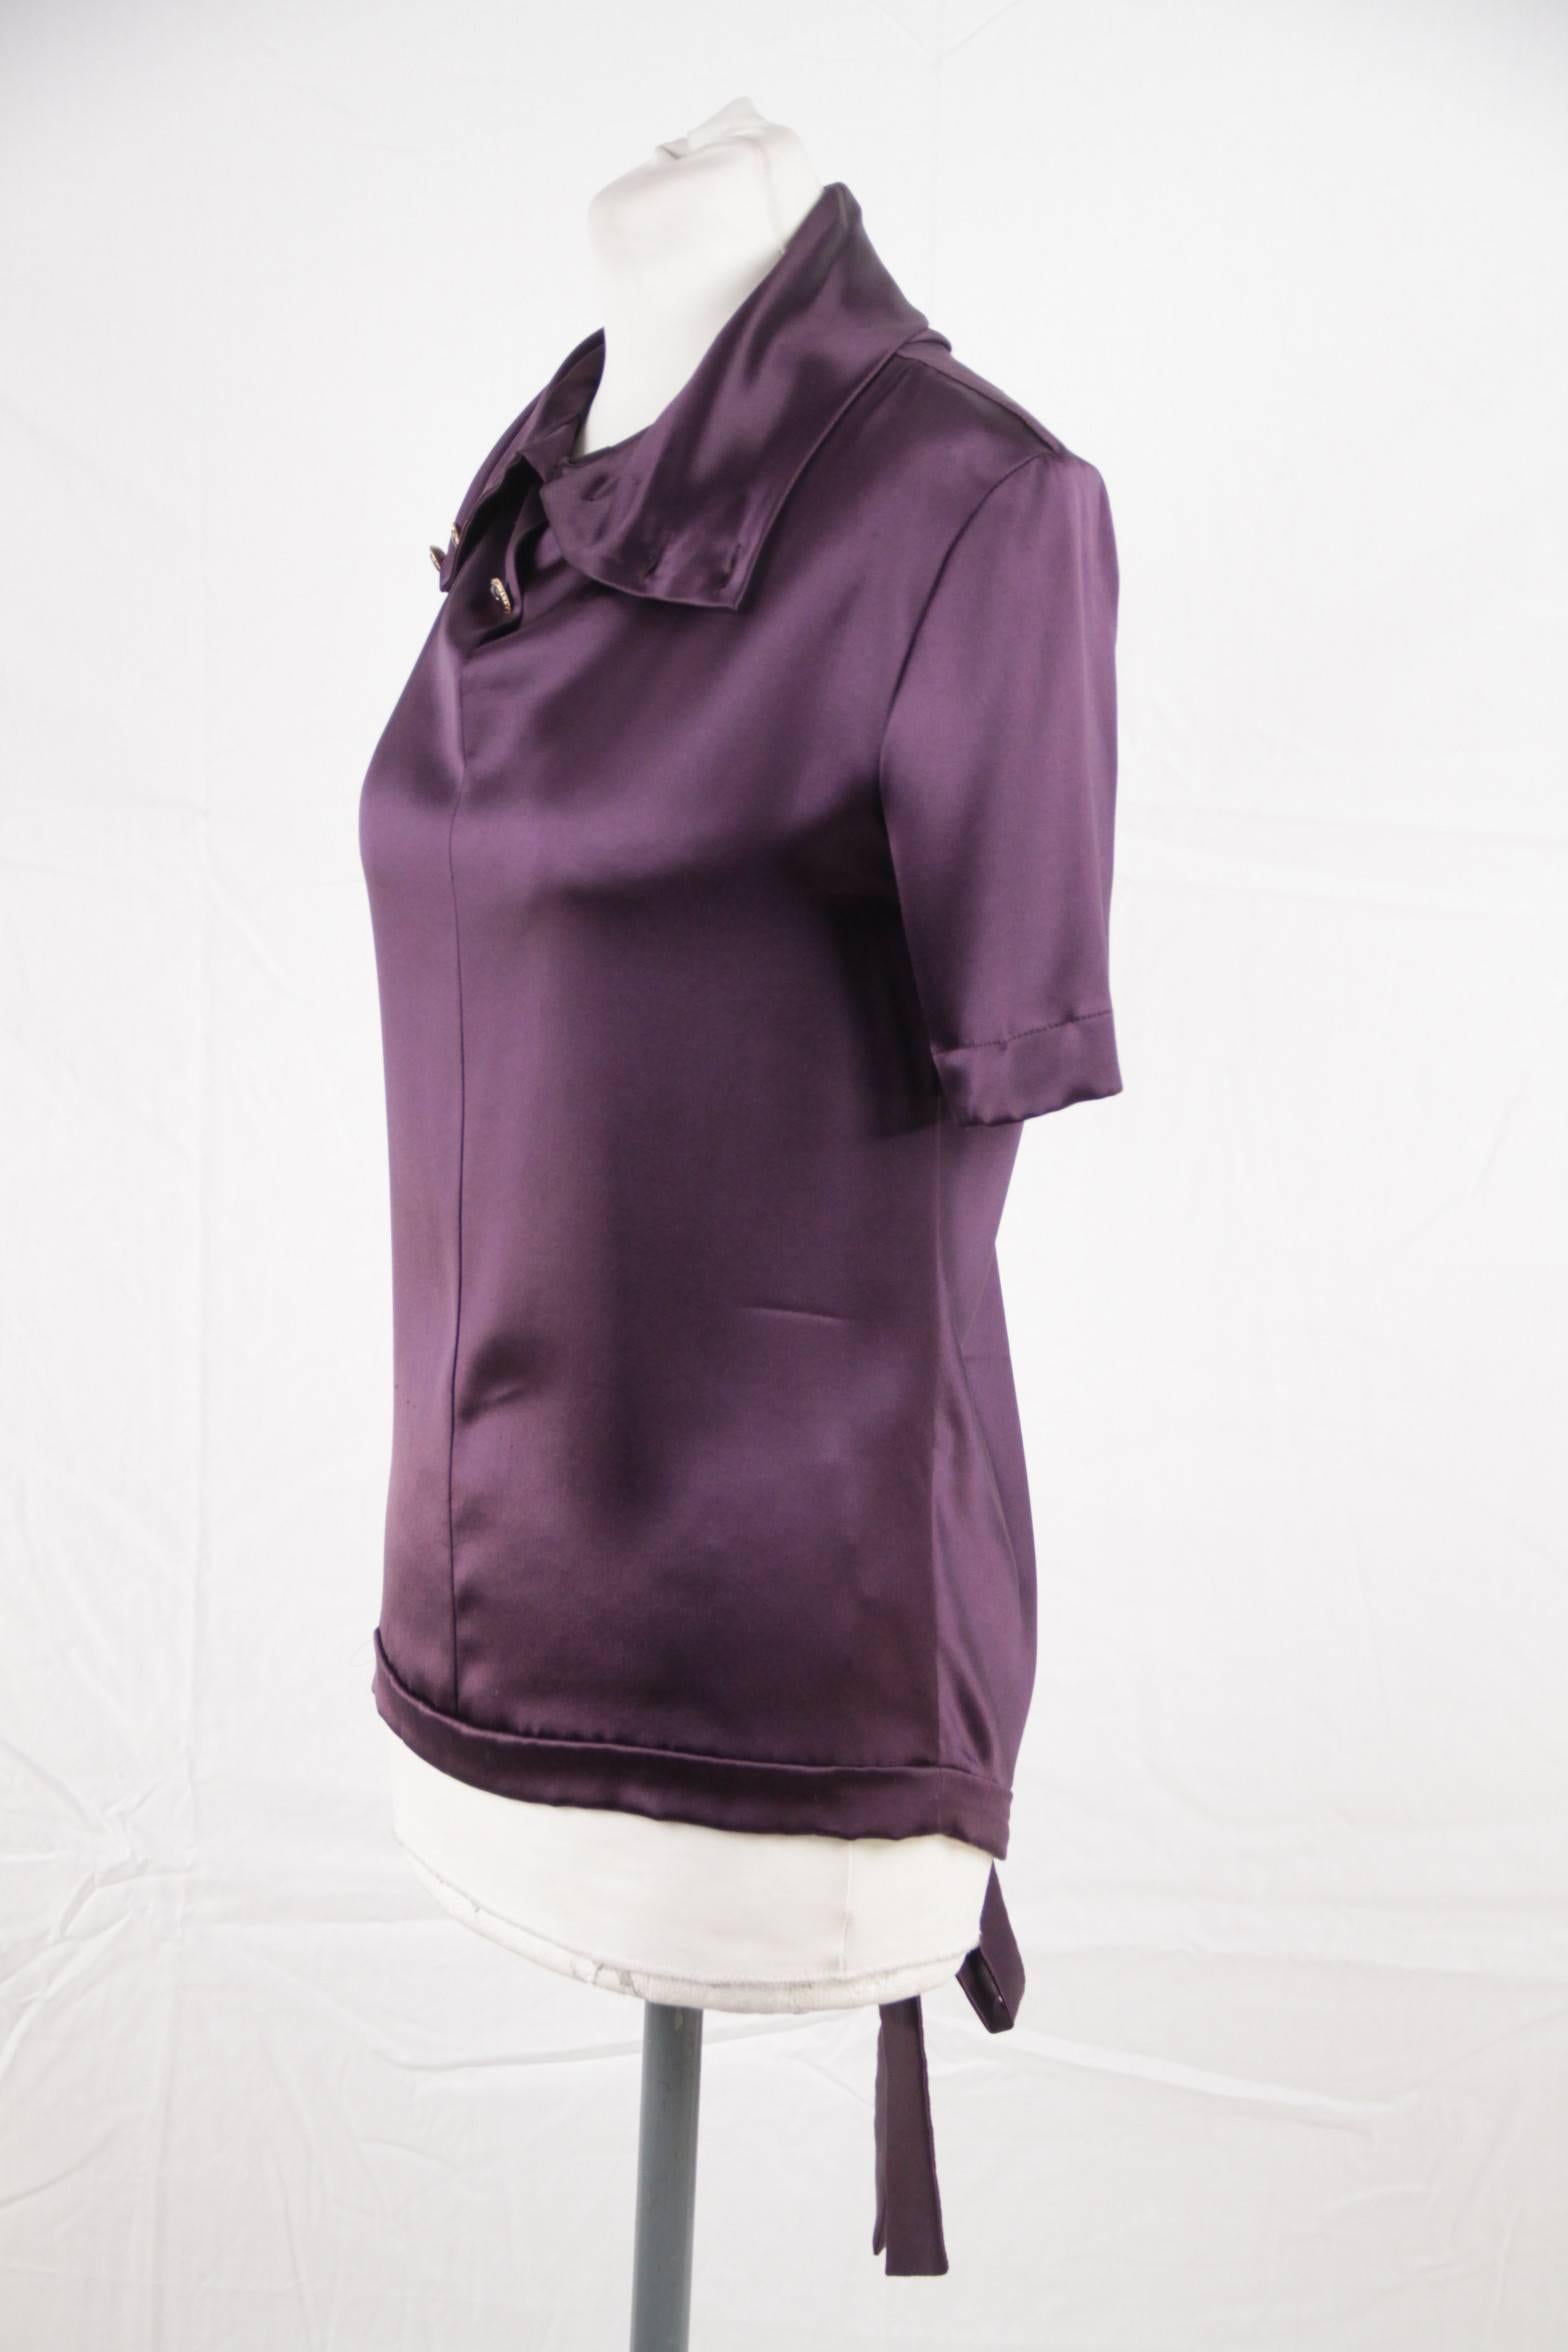 CHANEL Purple Silk SHORT SLEEVE BLOUSE Shirt SIZE 36 EM 1